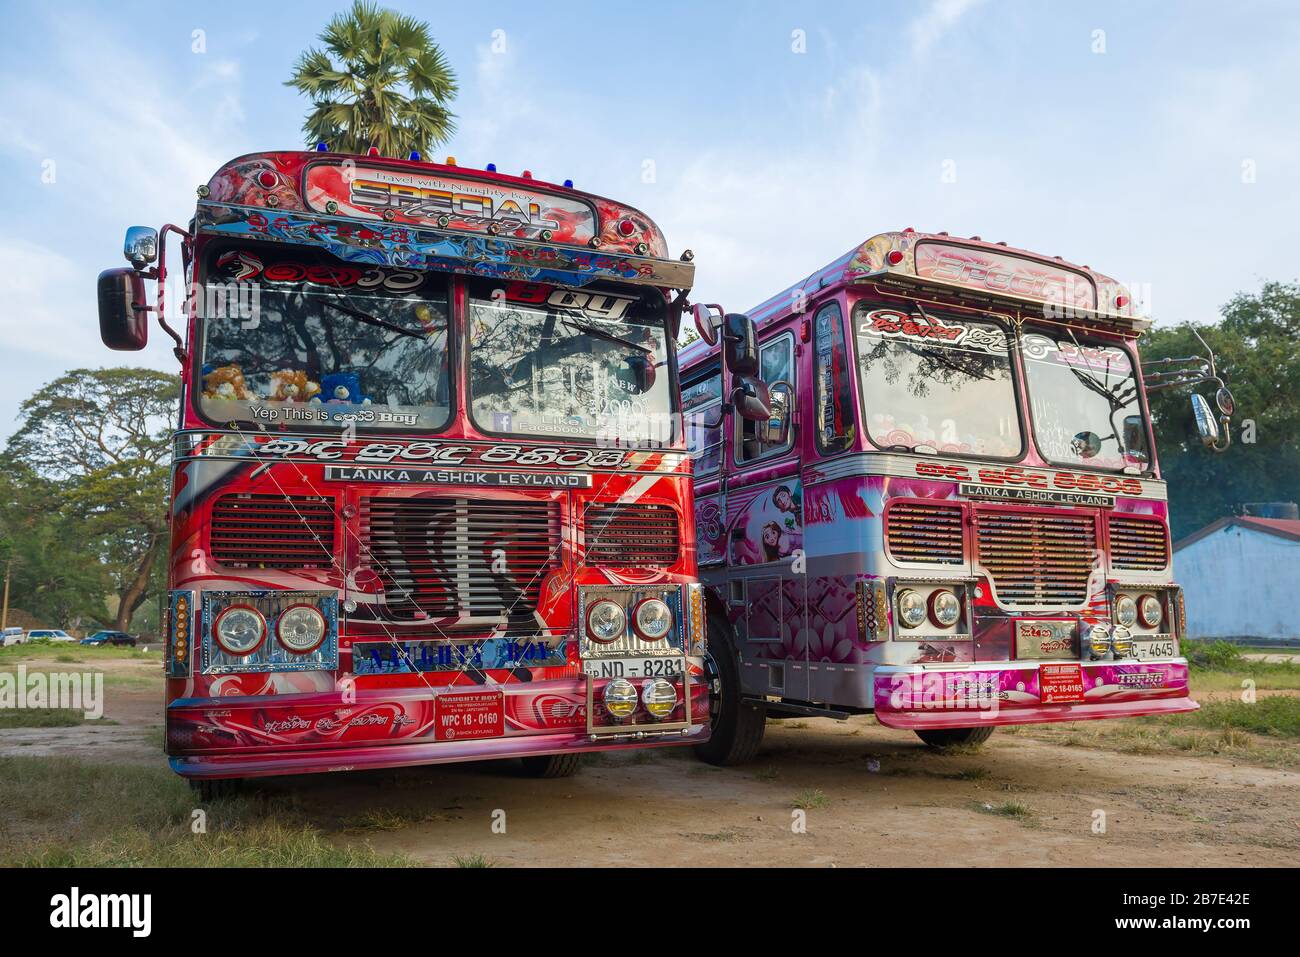 ANURADHAPURA, SRI LANKA - FEBRUARY 04, 2020: Two painted tourist buses 'Ashok Leyland' close-up. Front view Stock Photo